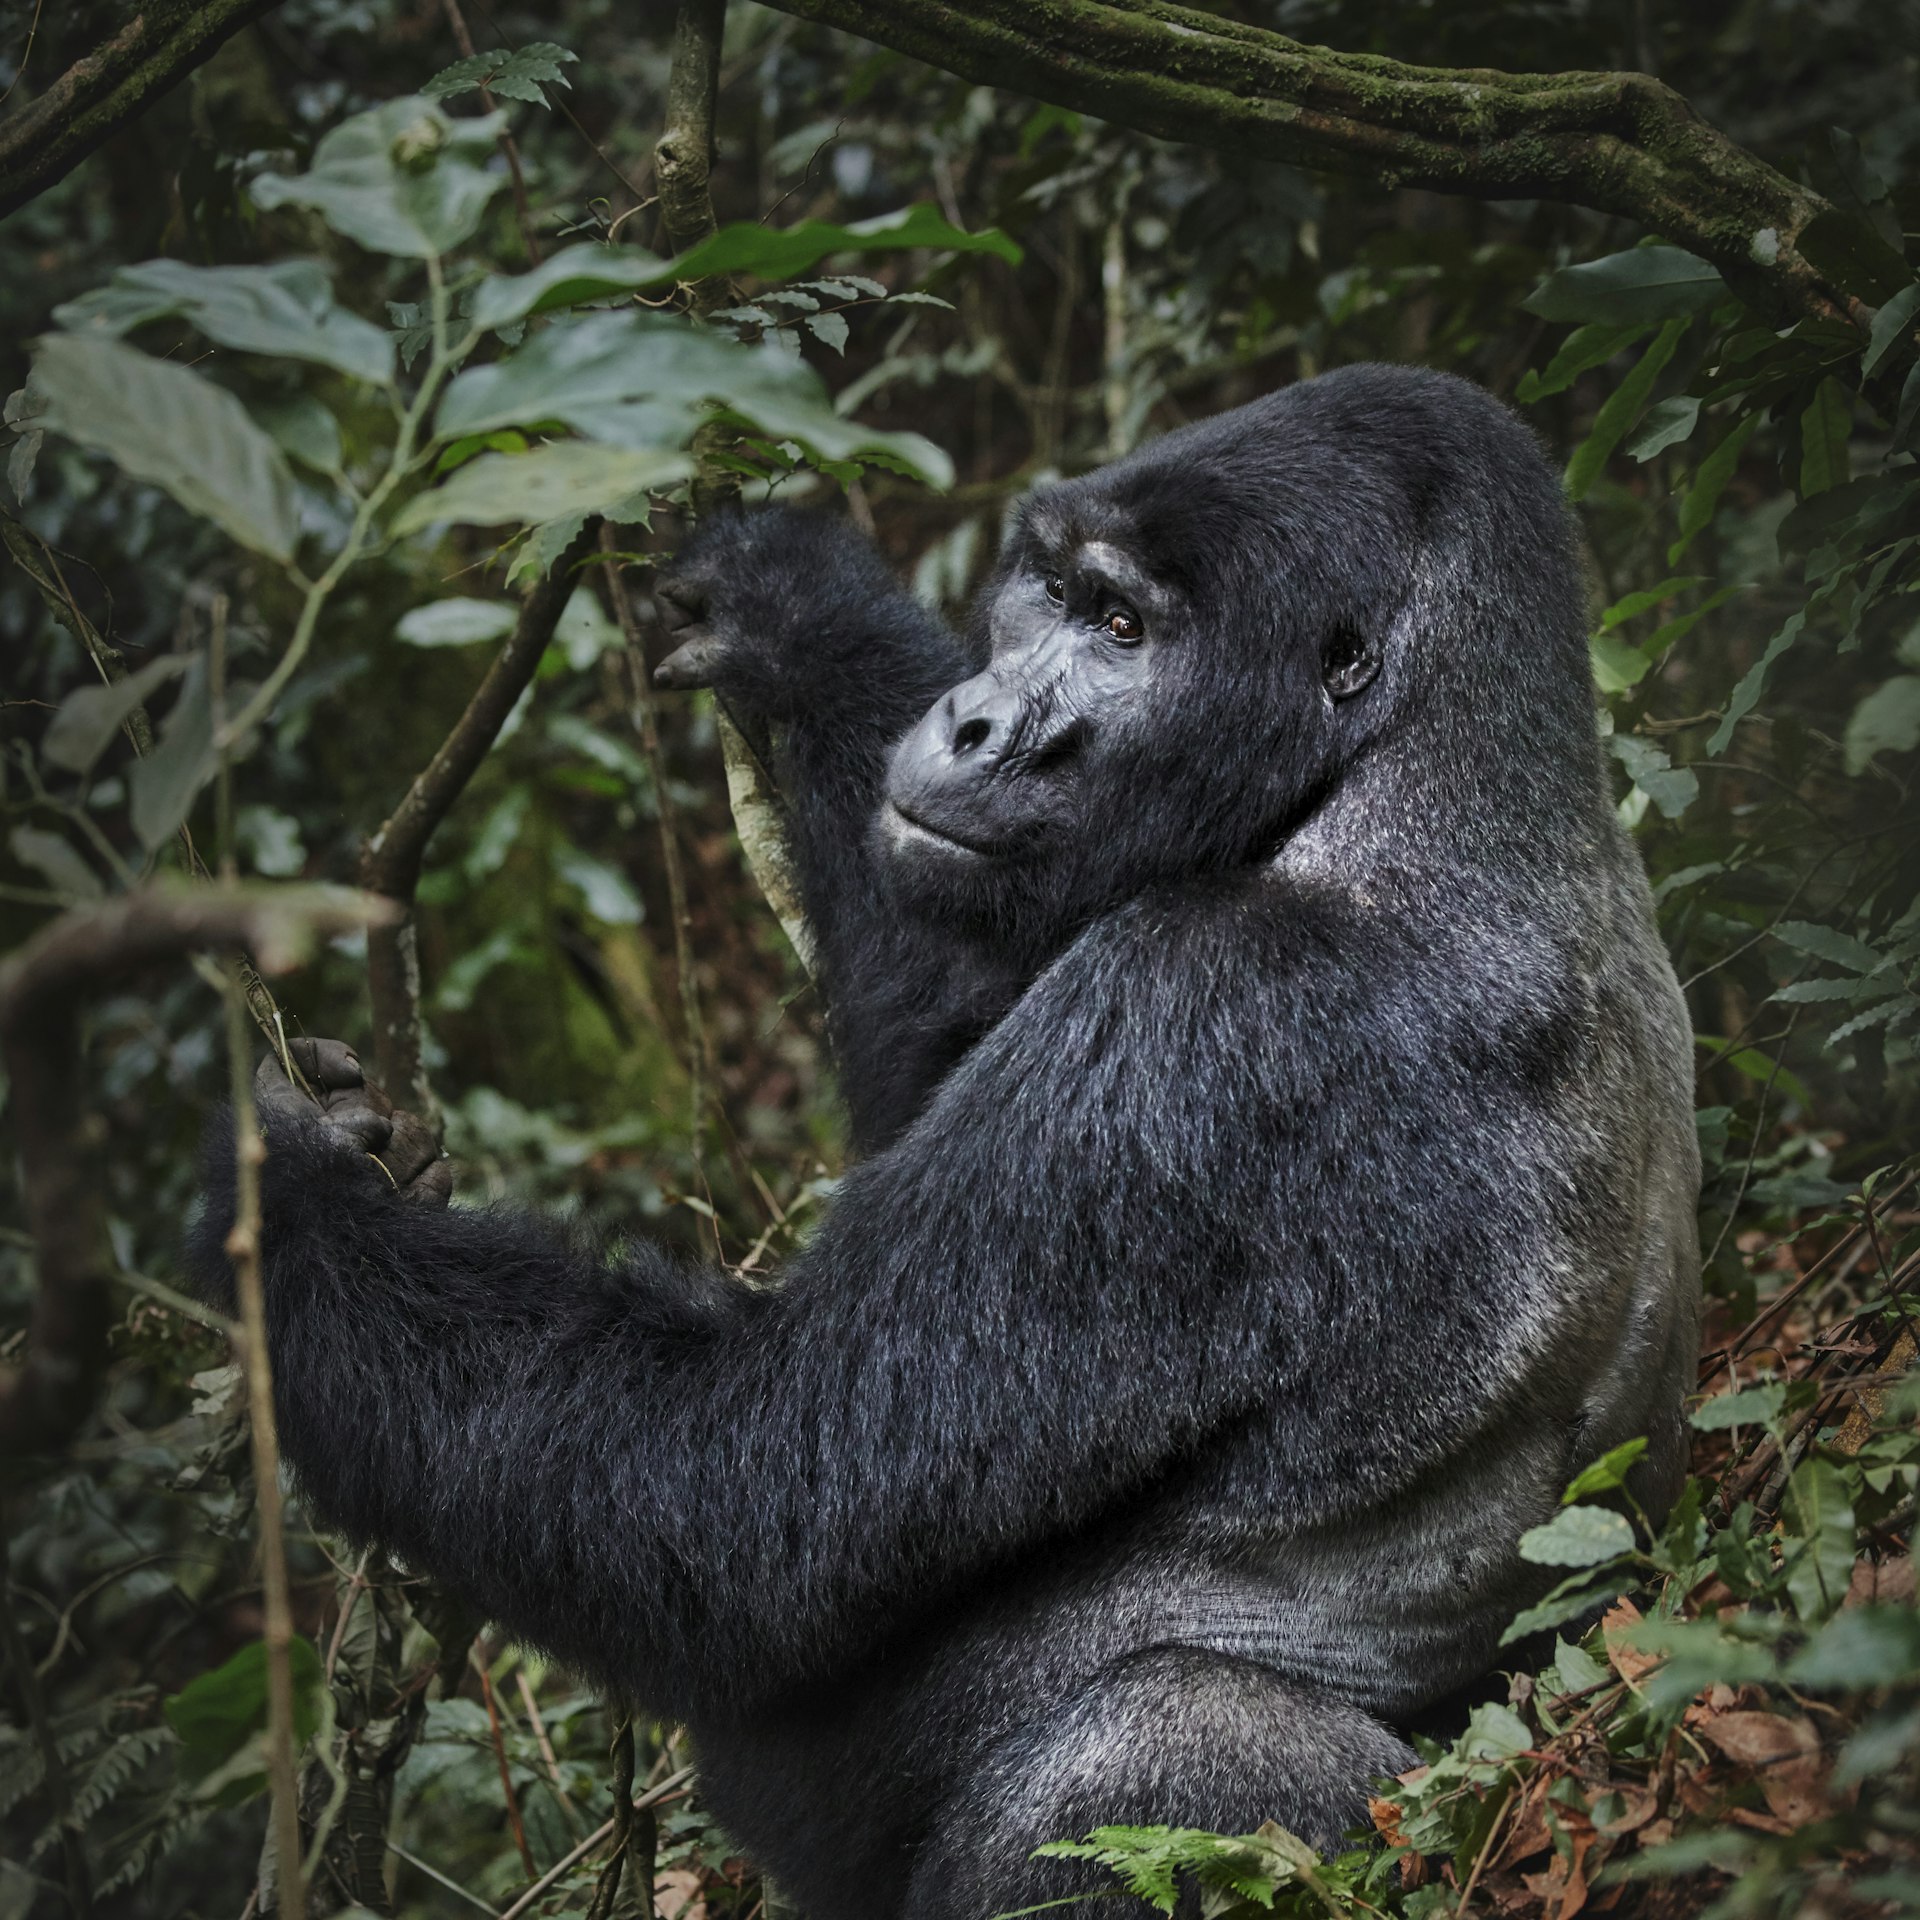 A gorilla in Bwindi Impenetrable Forest National Park, Uganda, Africa